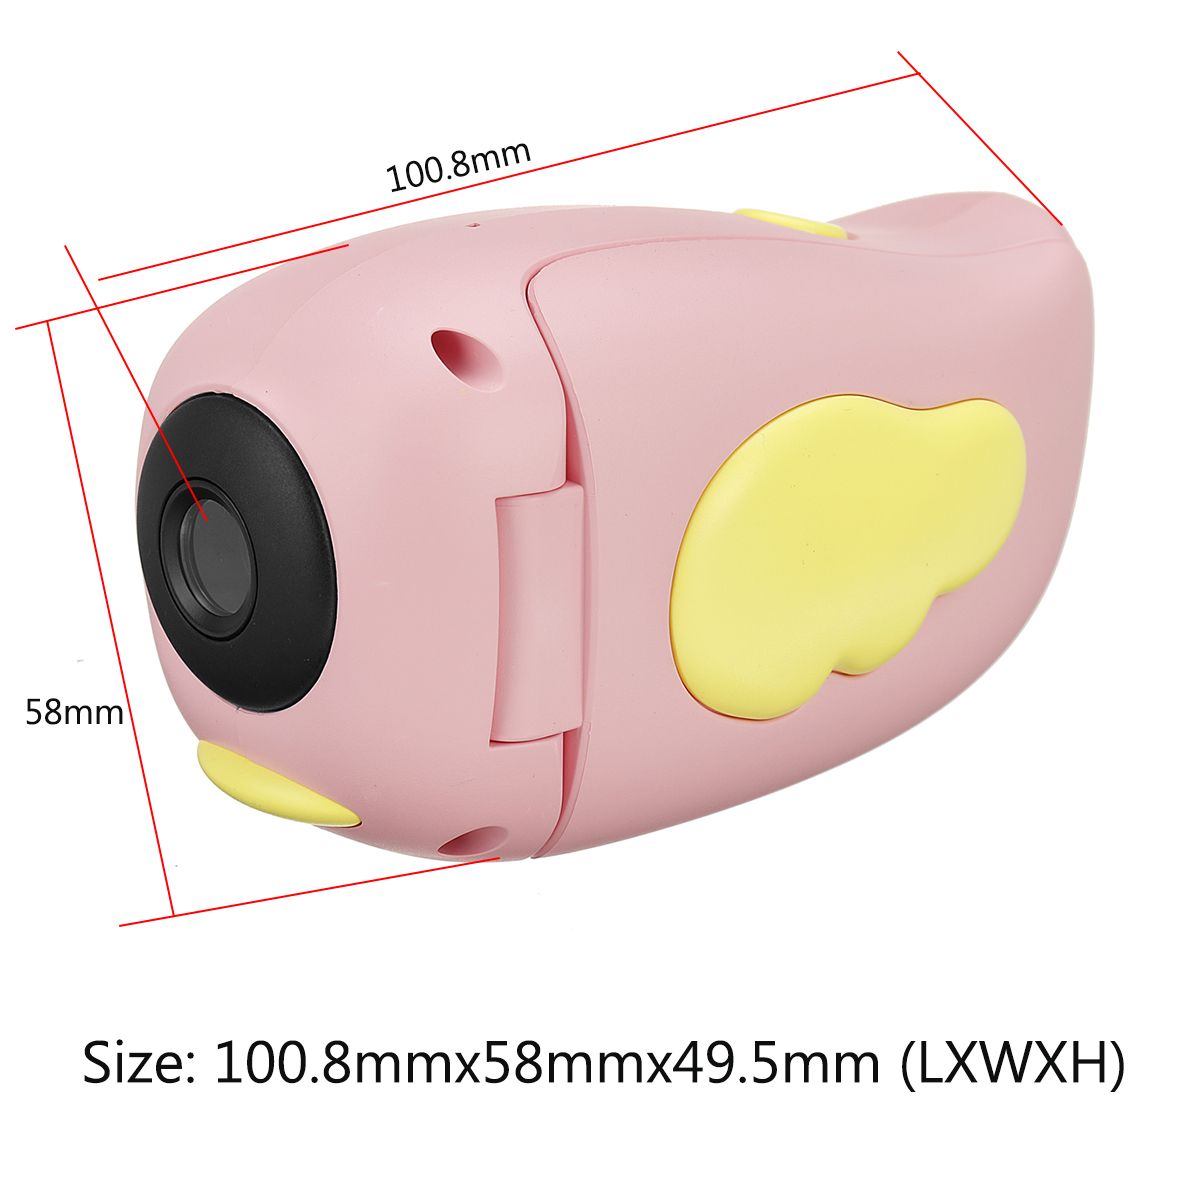 A100-20-Inch-Mini-Digital-Children-Camera-1500W-Pixel-HD-LCD-Camera-Toy-Gift-For-Kids-1764562